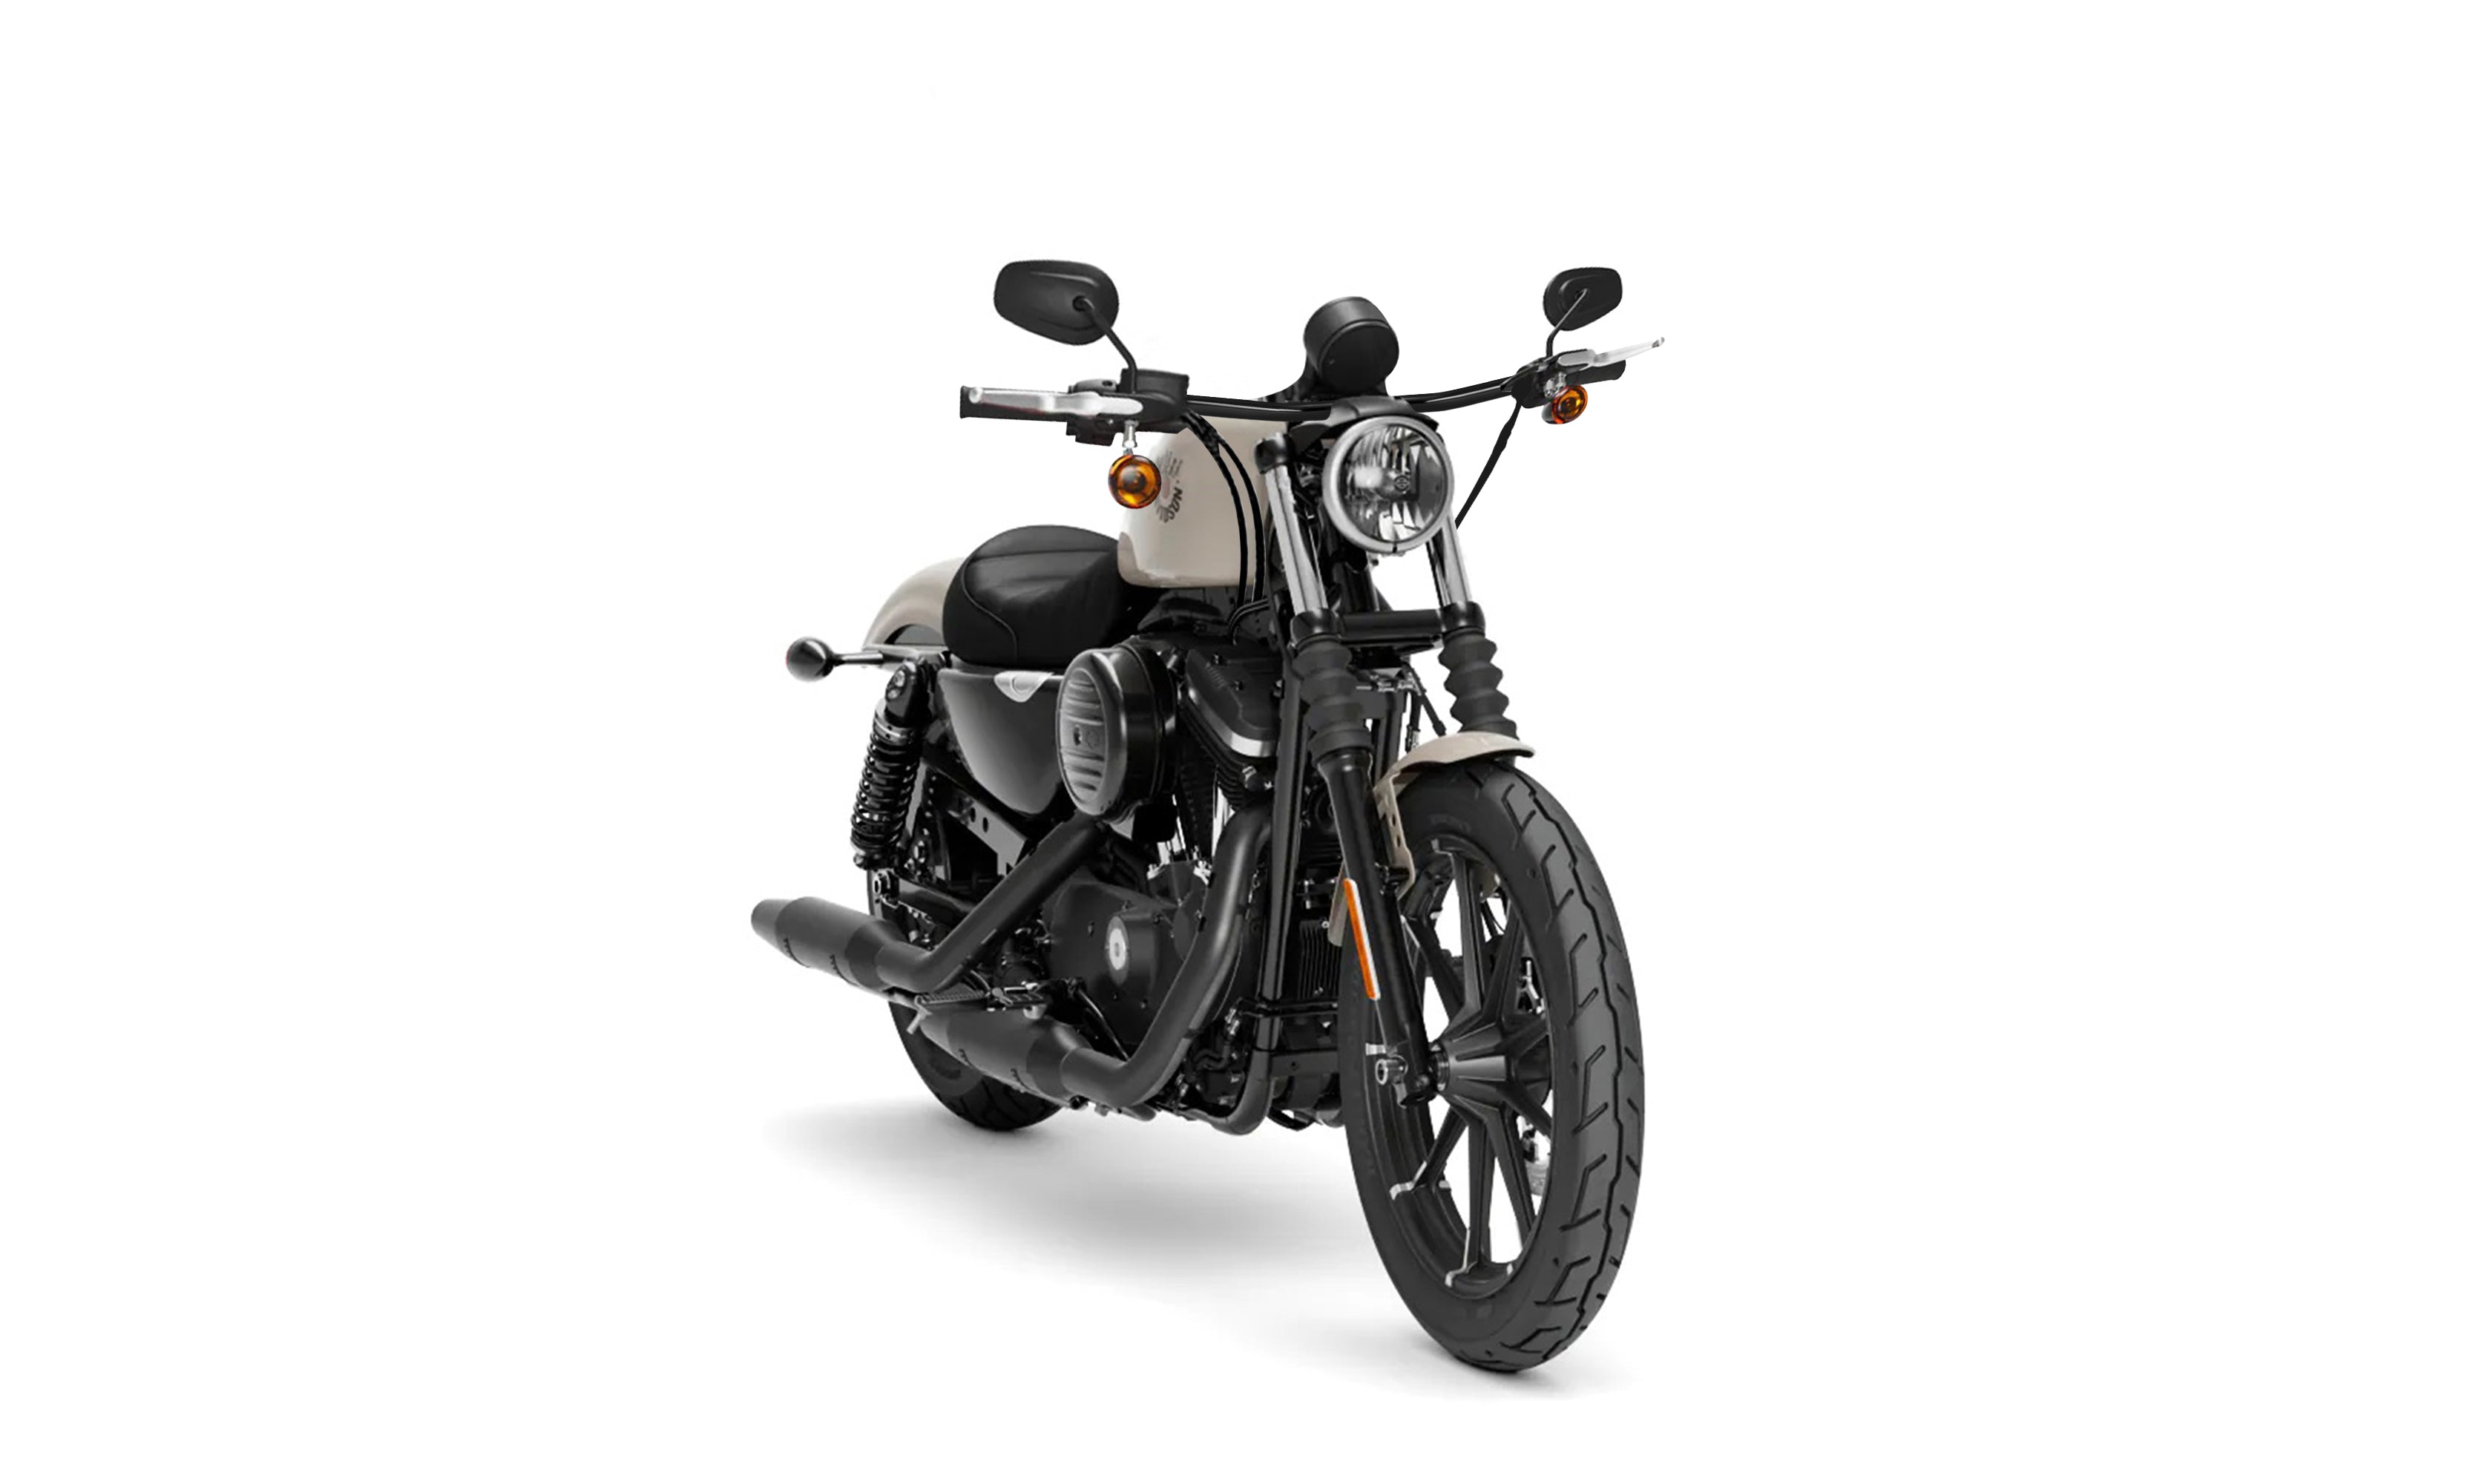 Viking Iron Born Drag Handlebar For Harley Sportster 883 Iron XL883N Gloss Black Bag on Bike View @expand